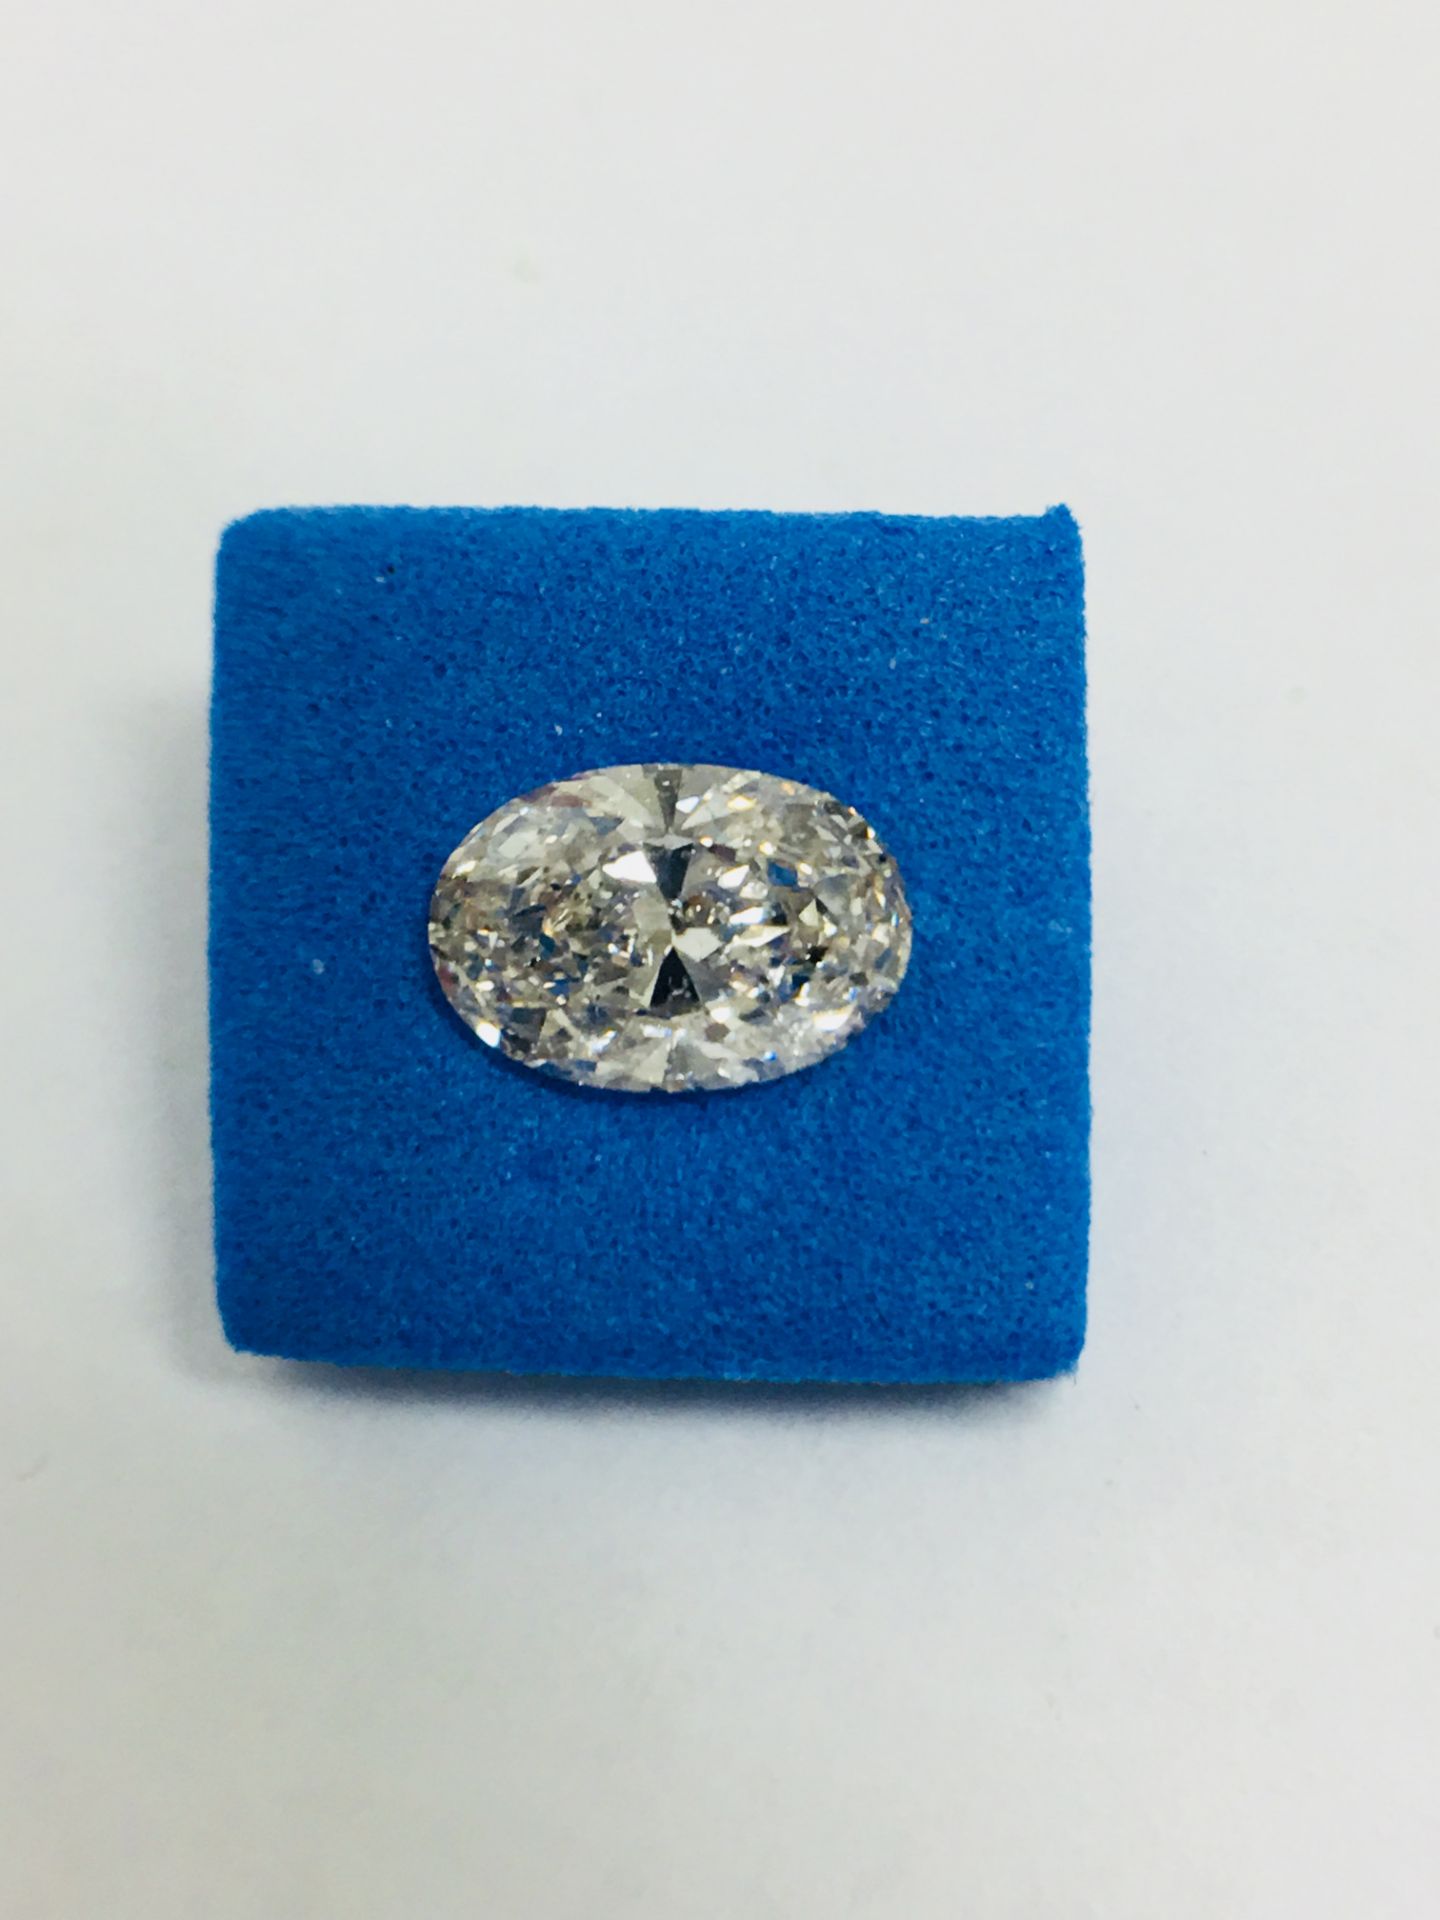 1.09ct Oval cut diamond natural untreated,IGI certification